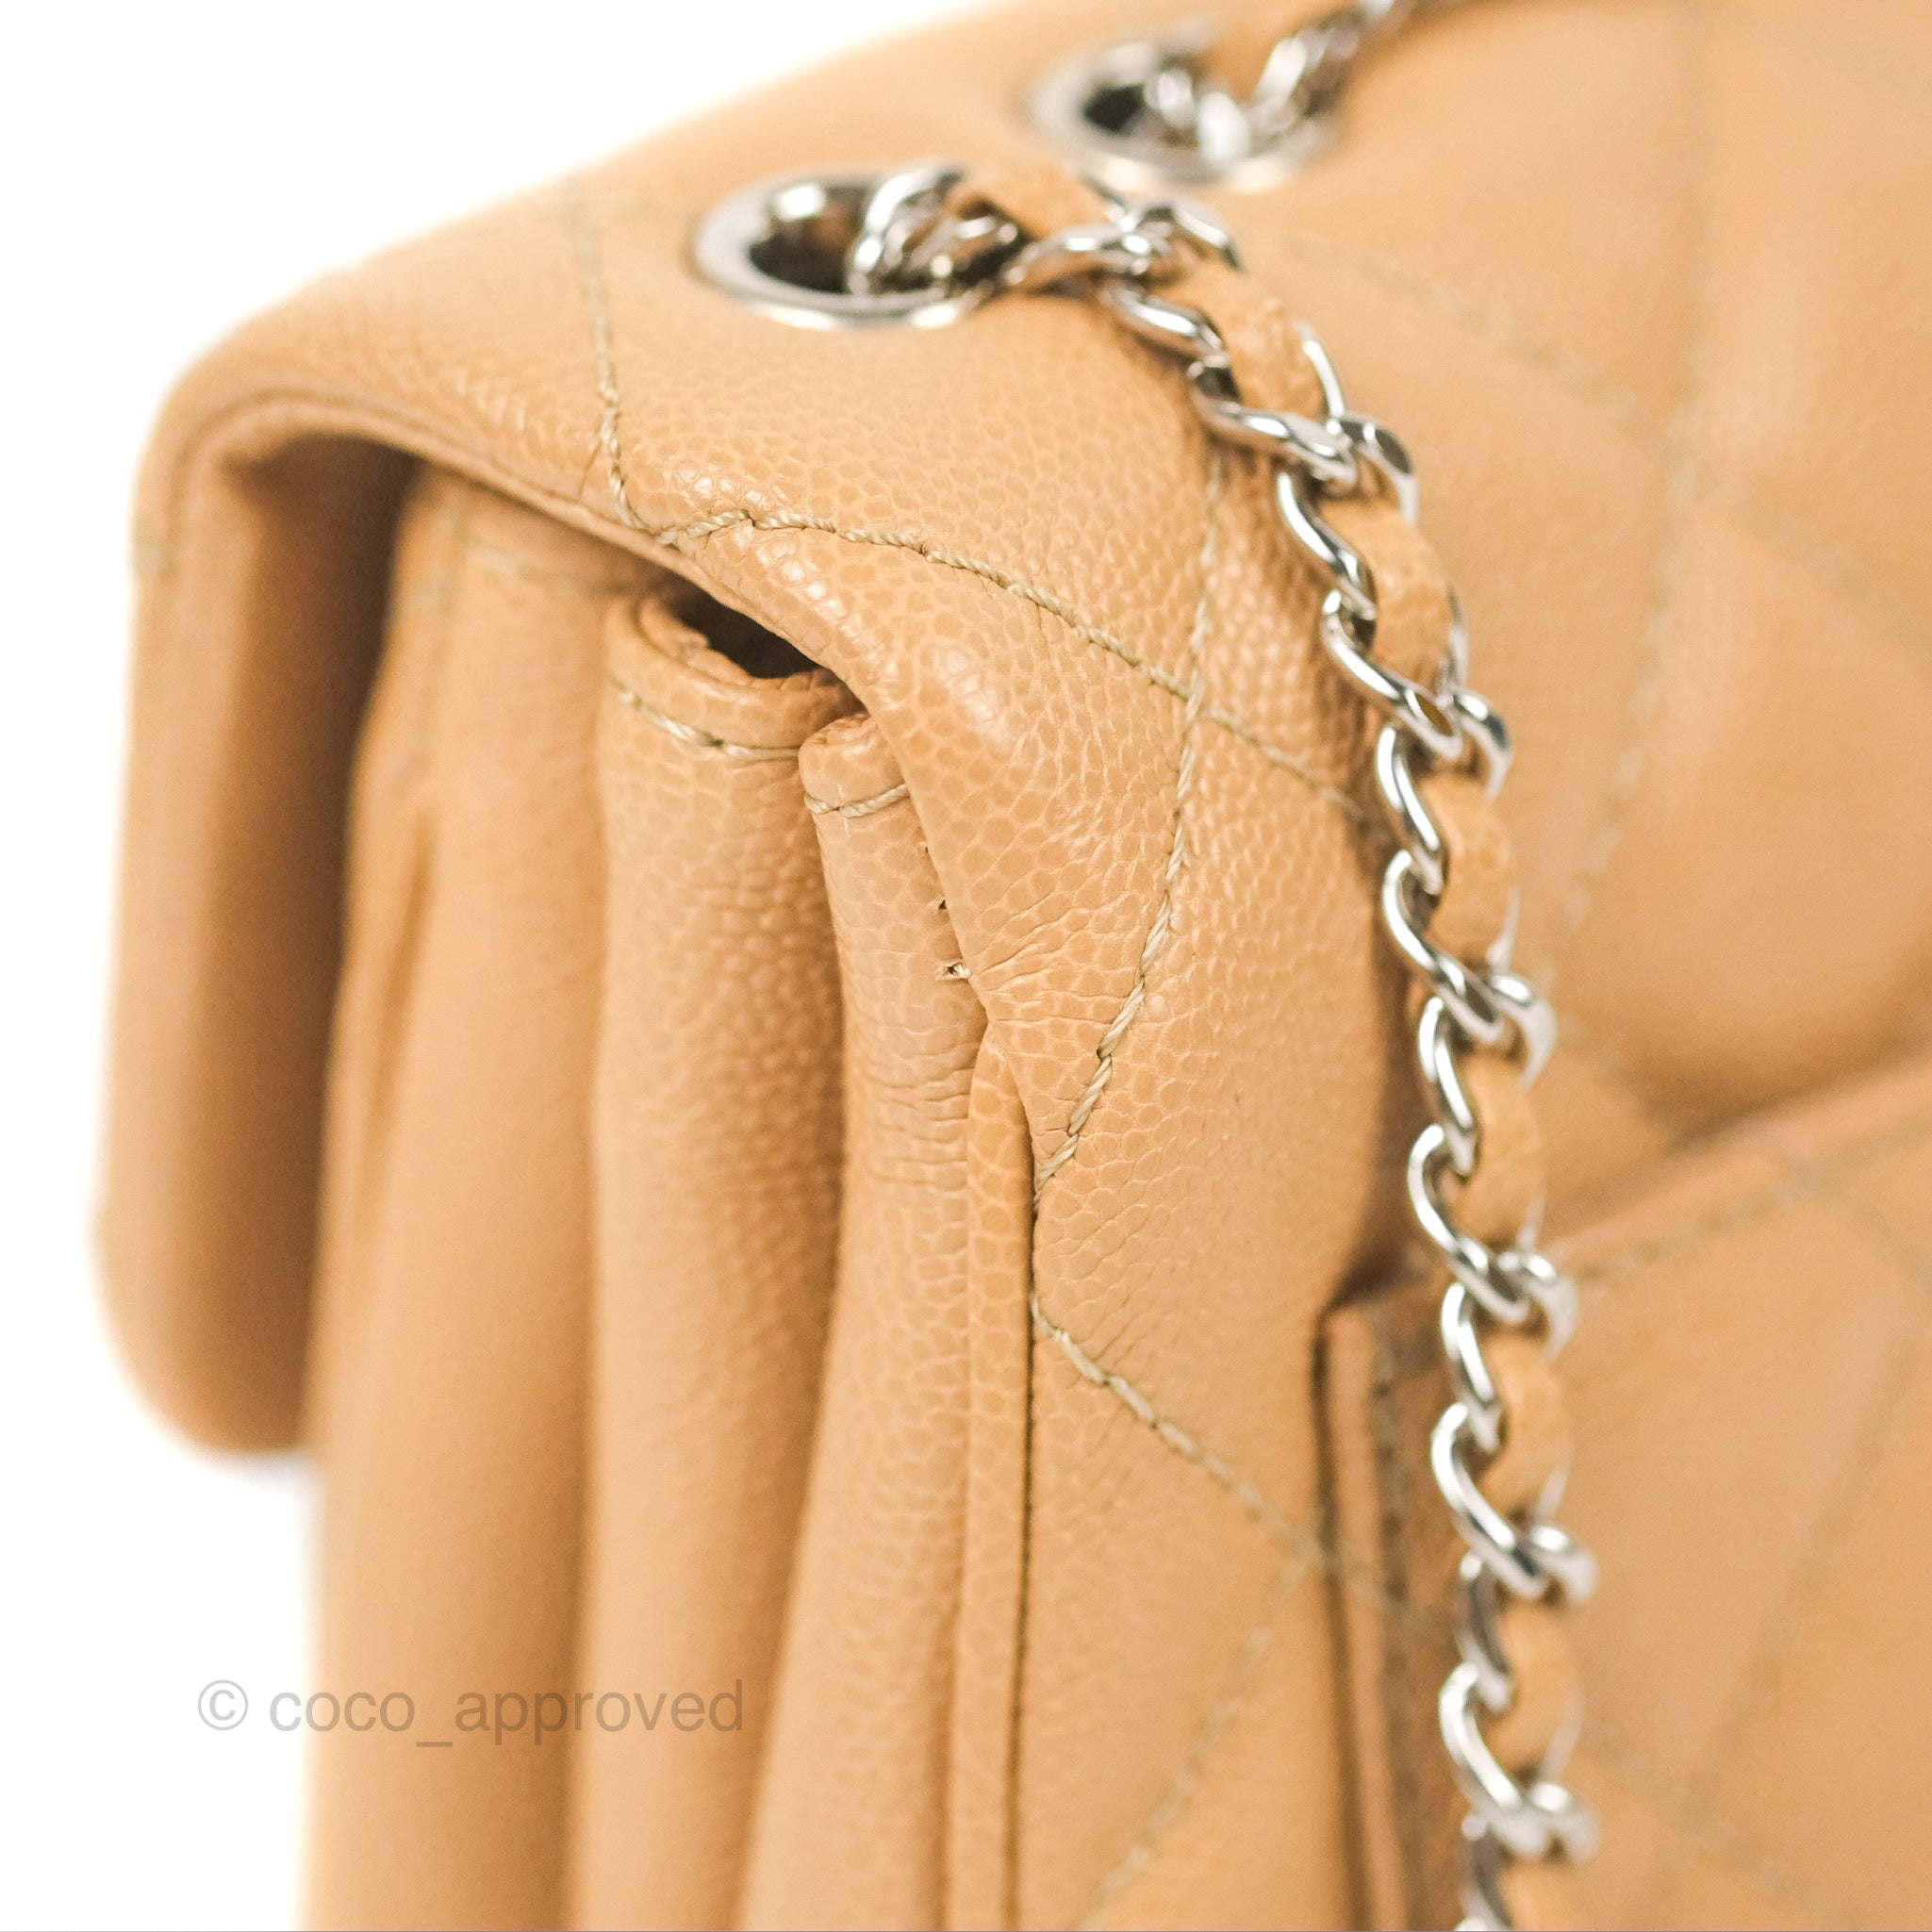 Battle of the Chanel Mini Bags: 2.55 versus Classic Flap - PurseBop